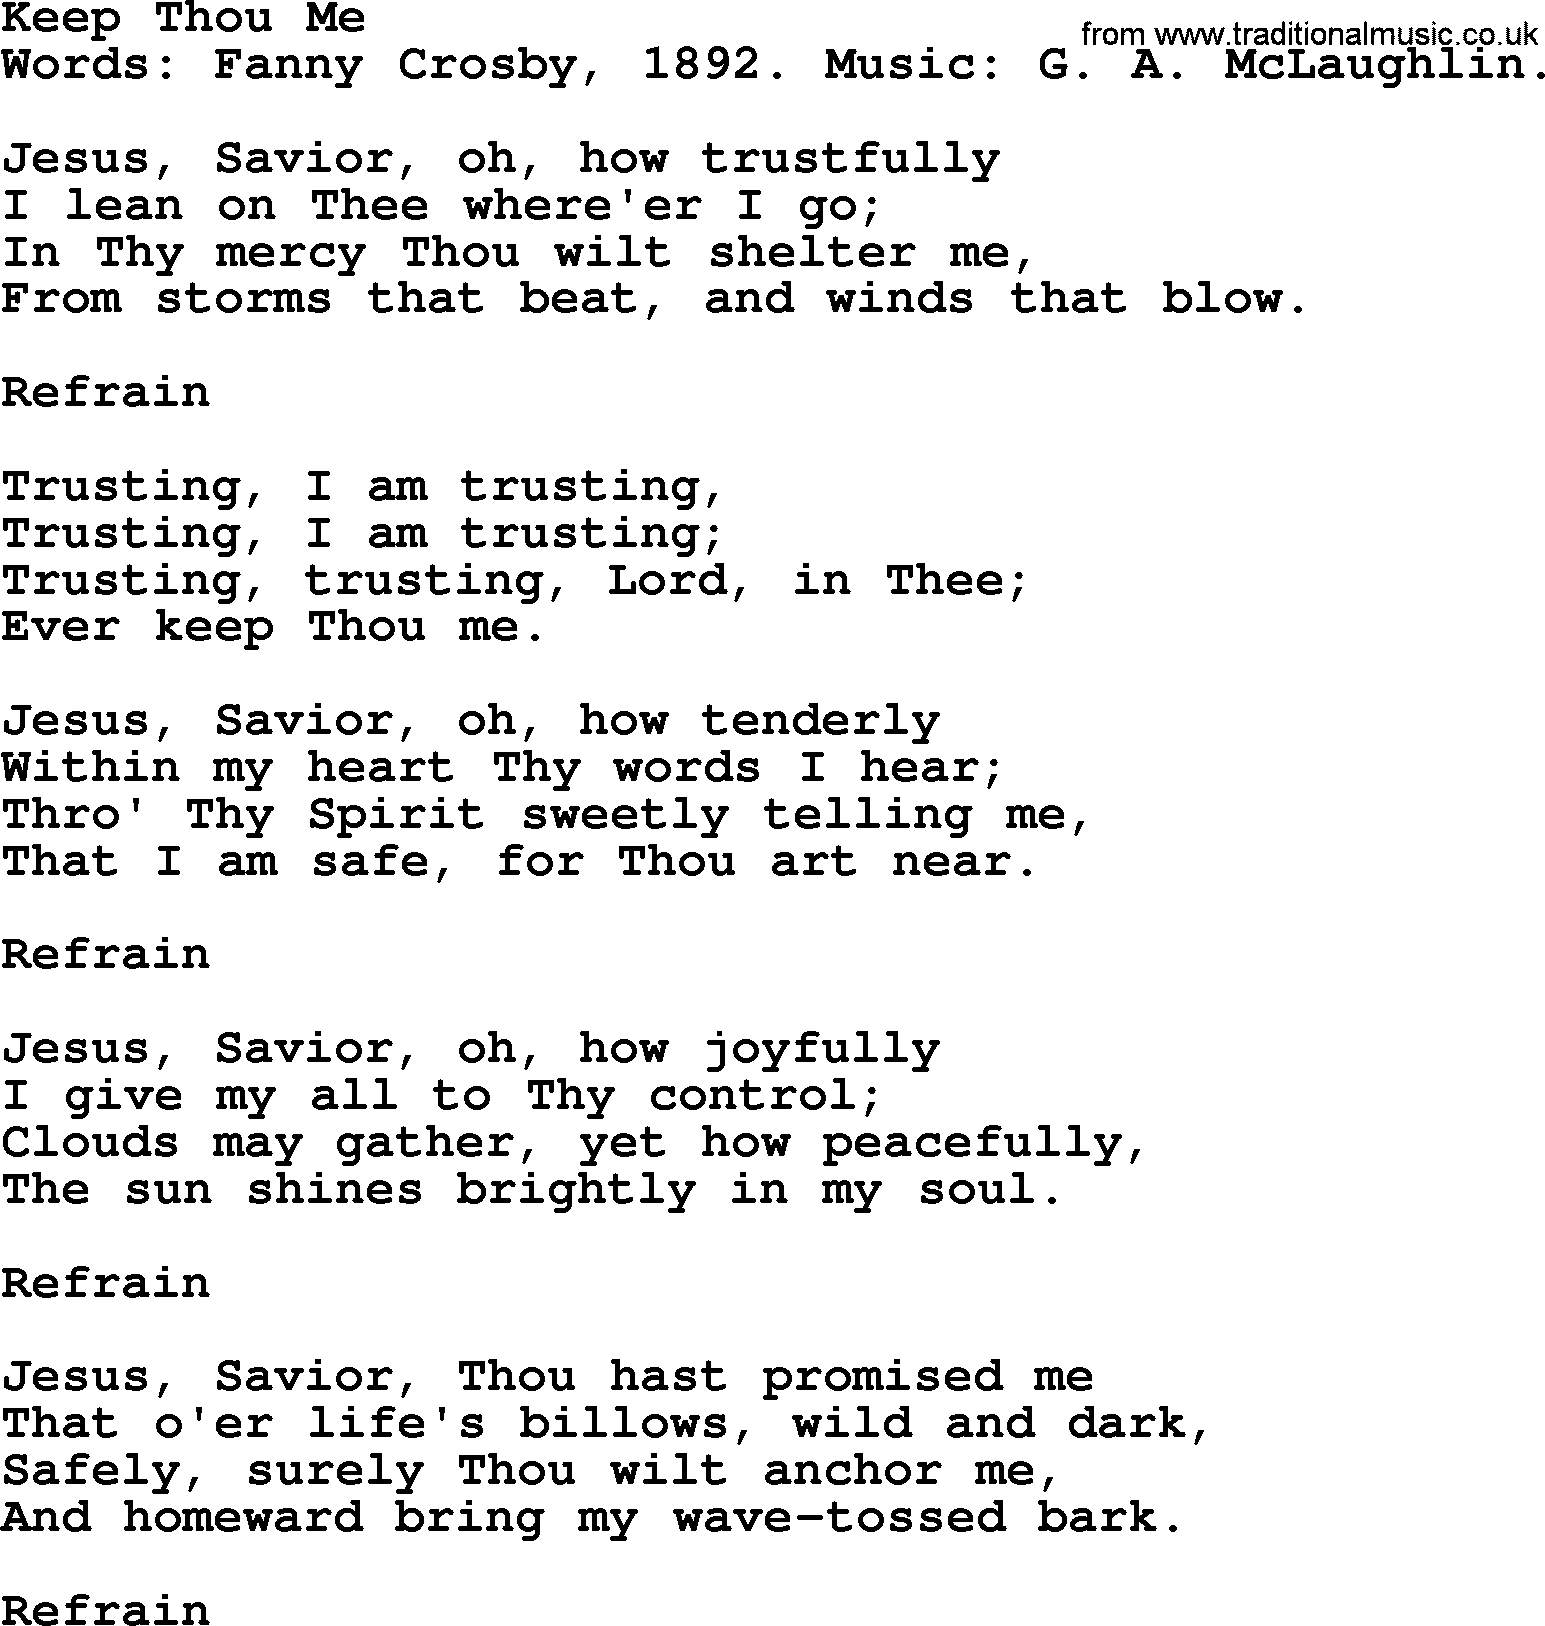 Fanny Crosby song: Keep Thou Me, lyrics